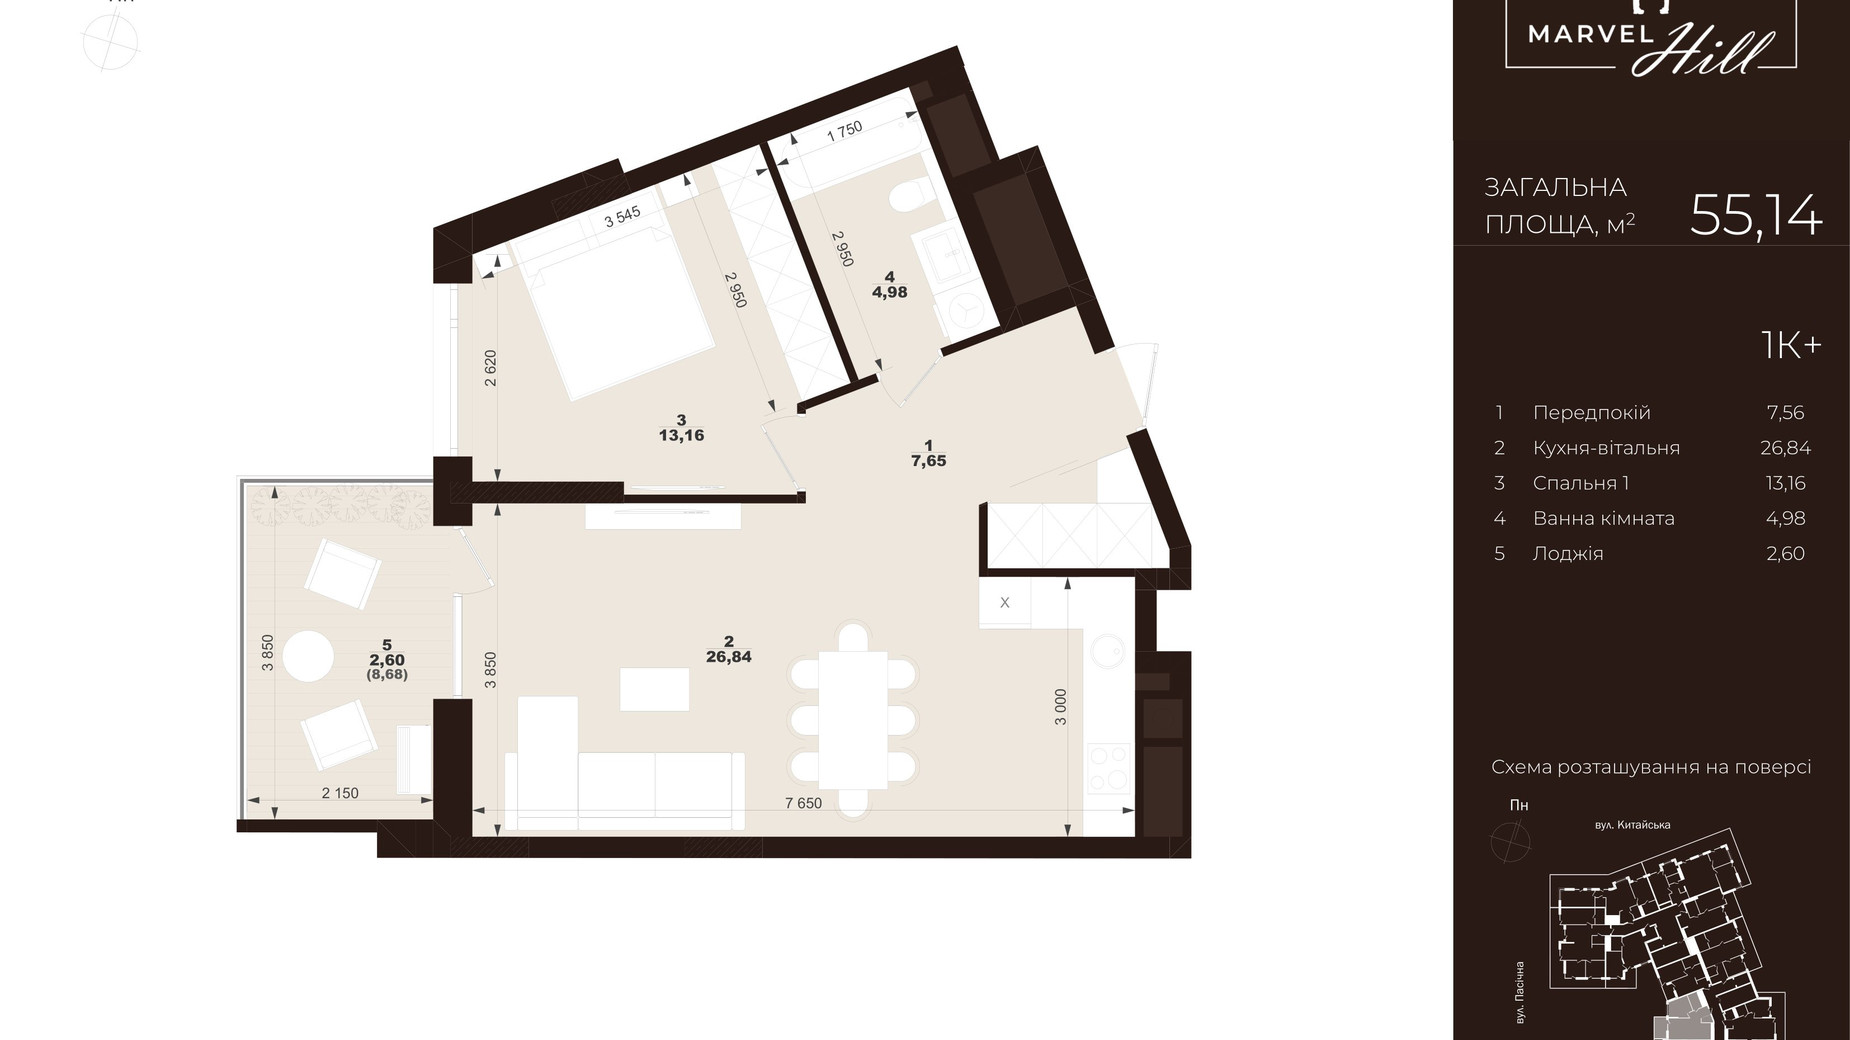 Планування 1-кімнатної квартири в ЖК Marvel Hill 55.14 м², фото 691444